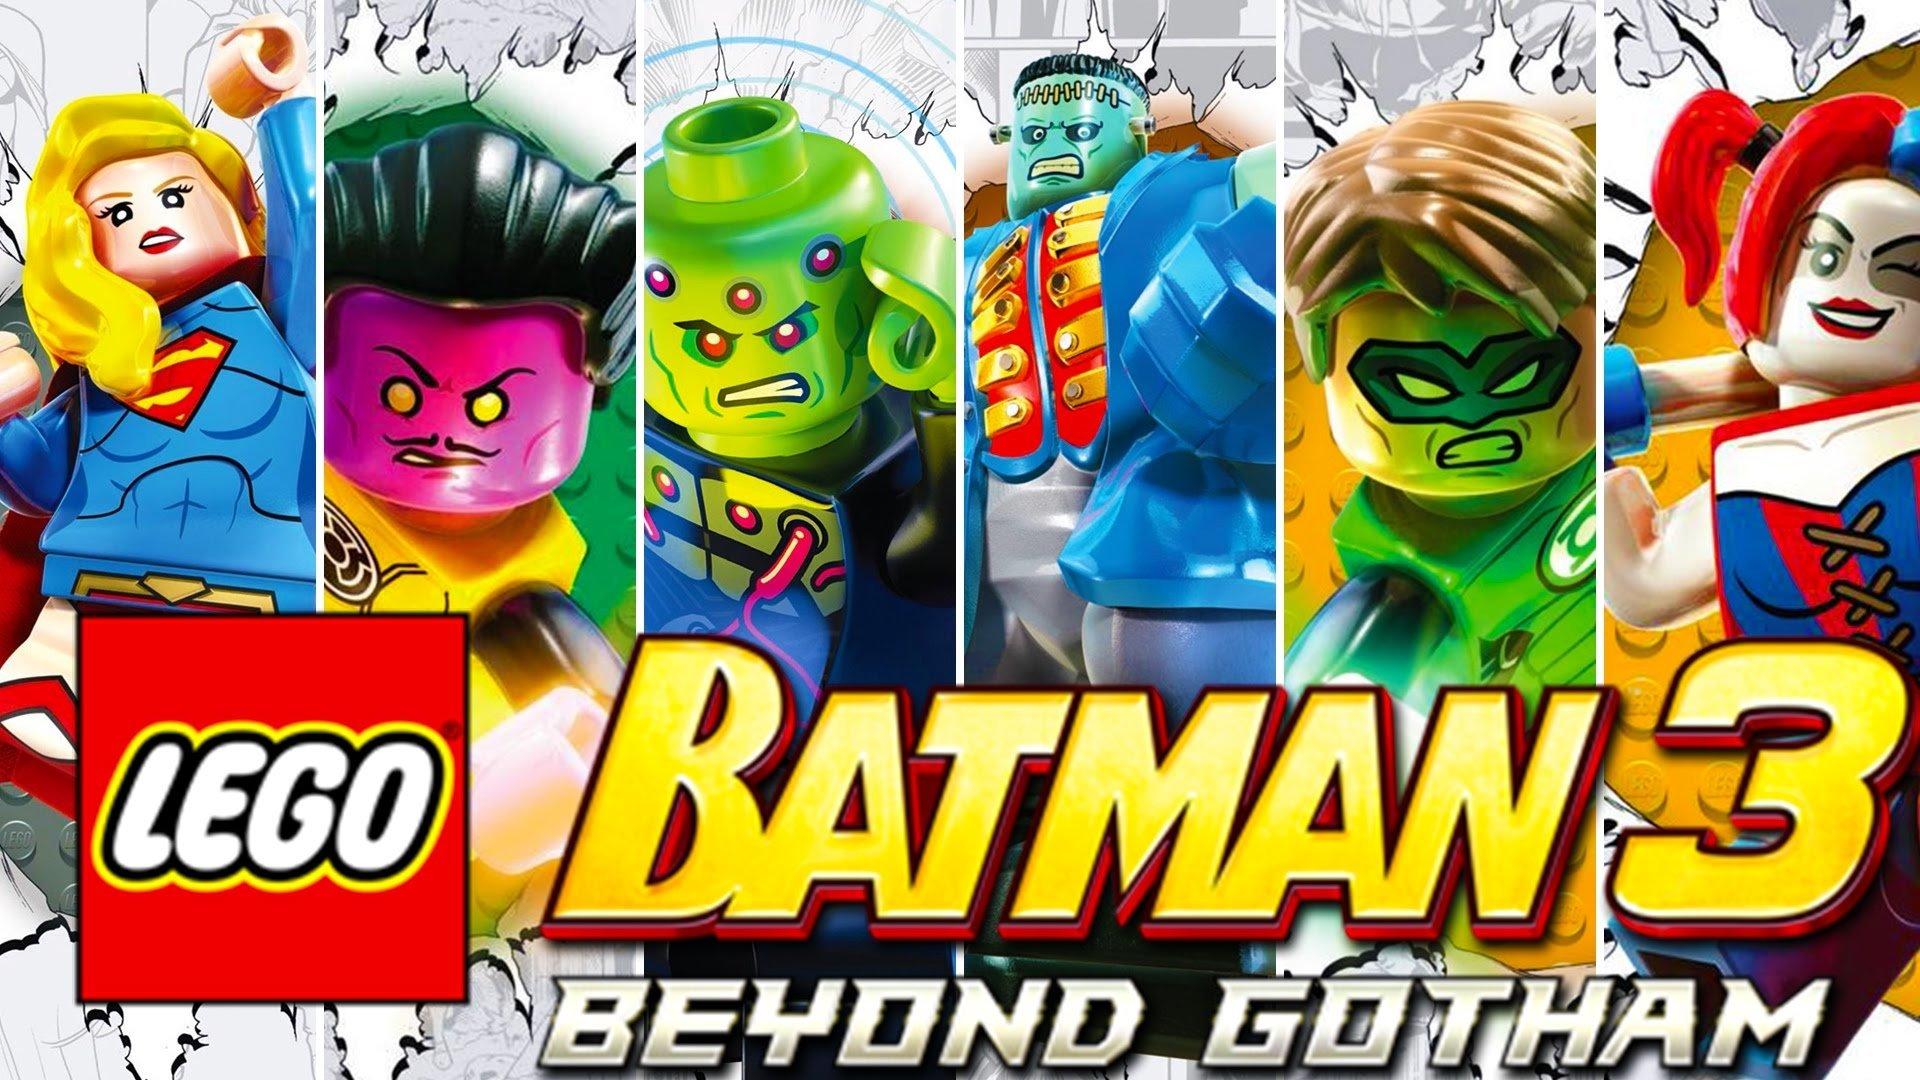 LEGO Batman 3: Beyond Gotham HD Wallpaper. Background Image